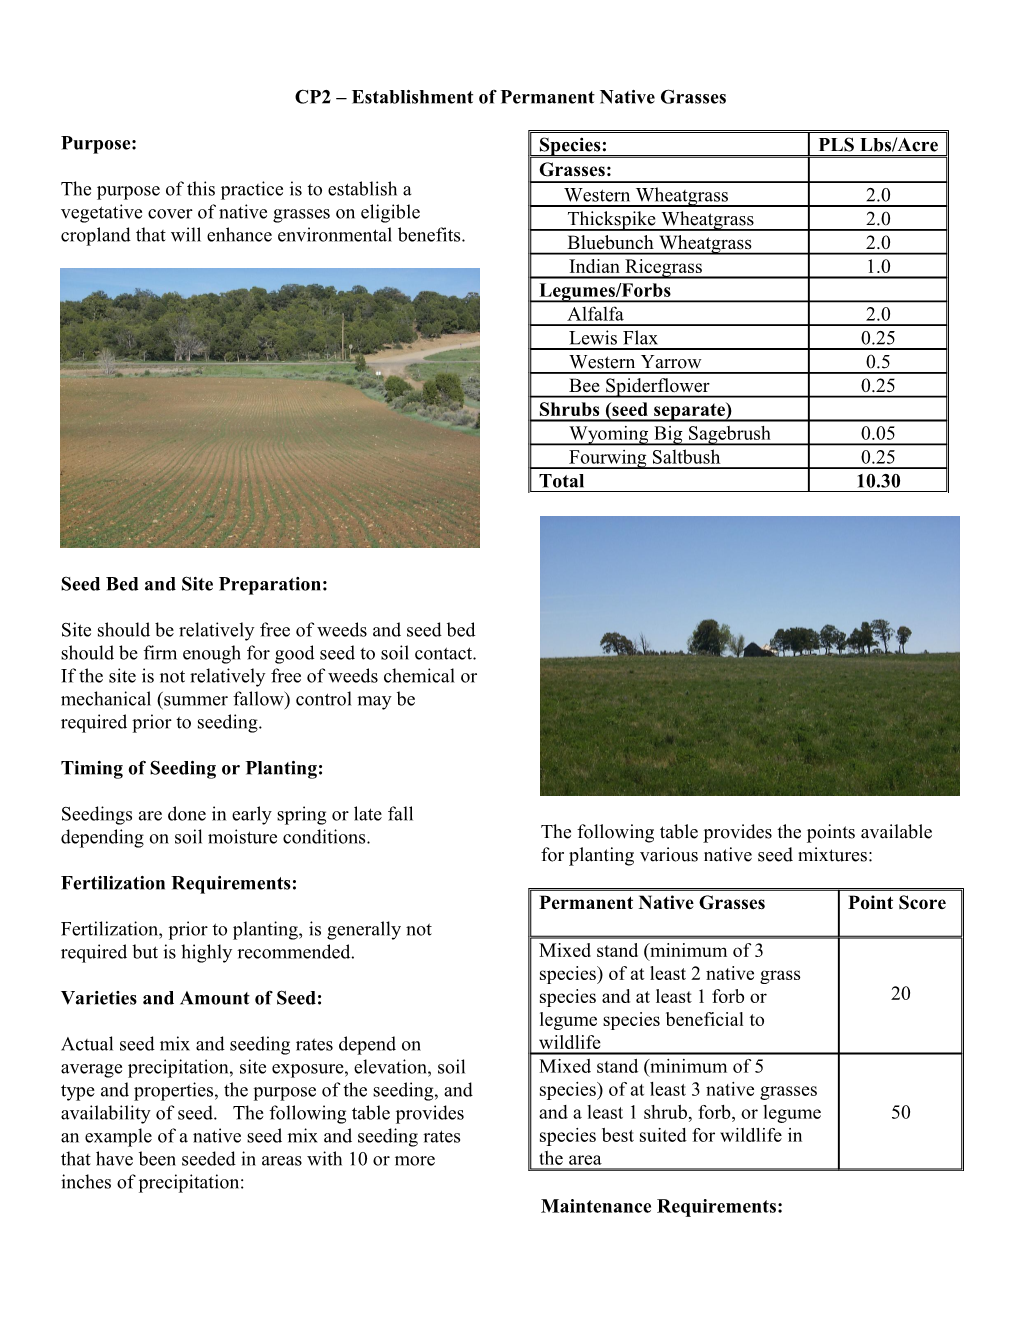 CP1 Establishment of Permanent Introduced Grasses and Legumes